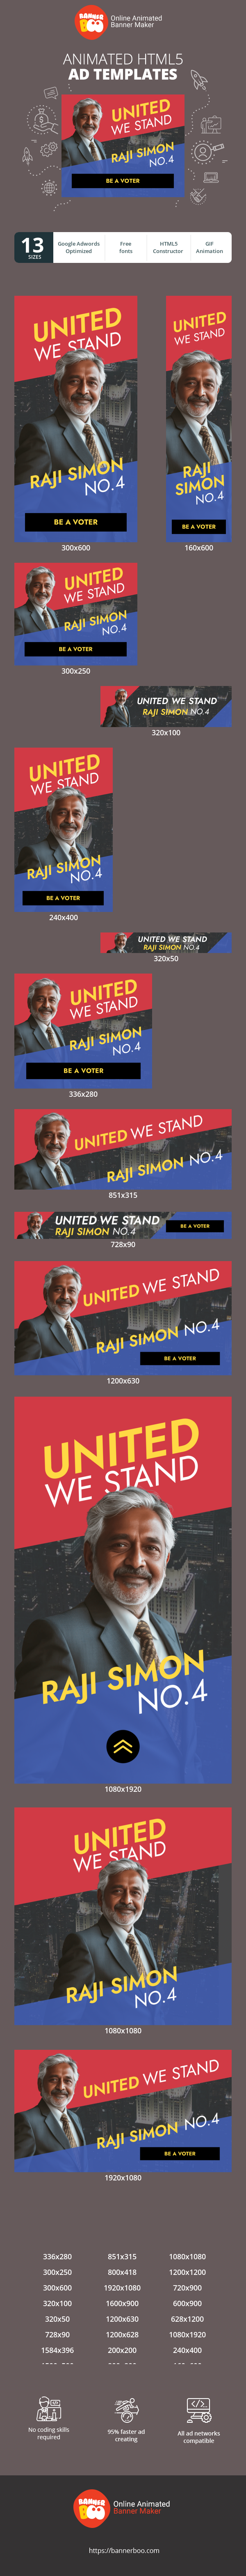 Banner ad template — United We Stand Raji Simon NO.4 — Vote Day